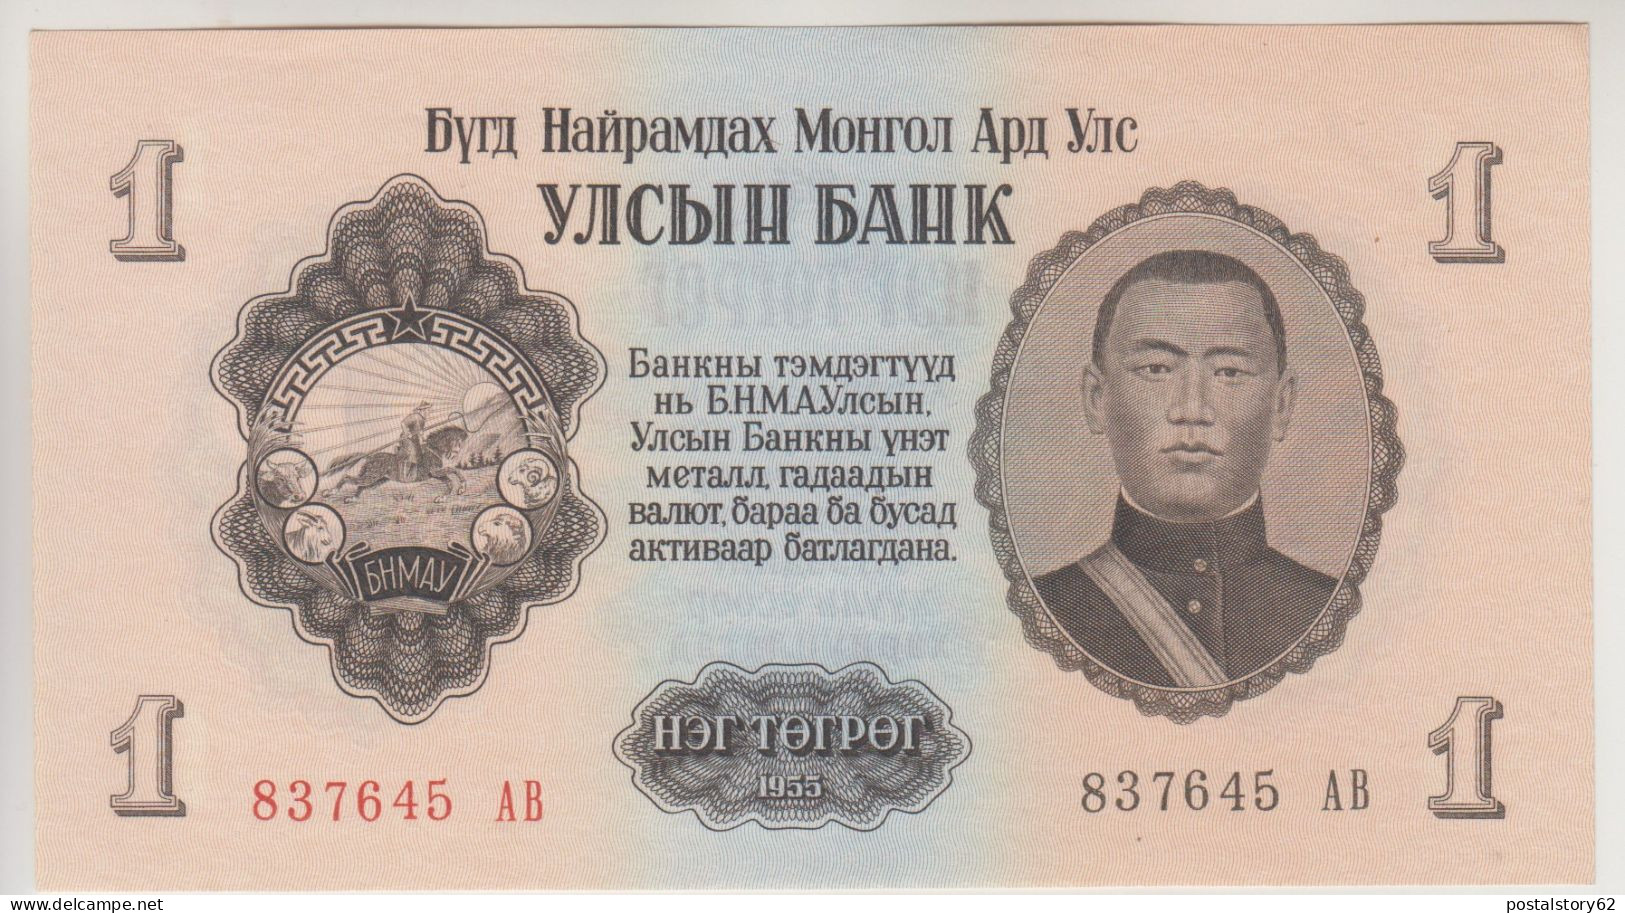 Mongolia, 1 Tugrik 1955 FDS Pick # 28 - Mongolei